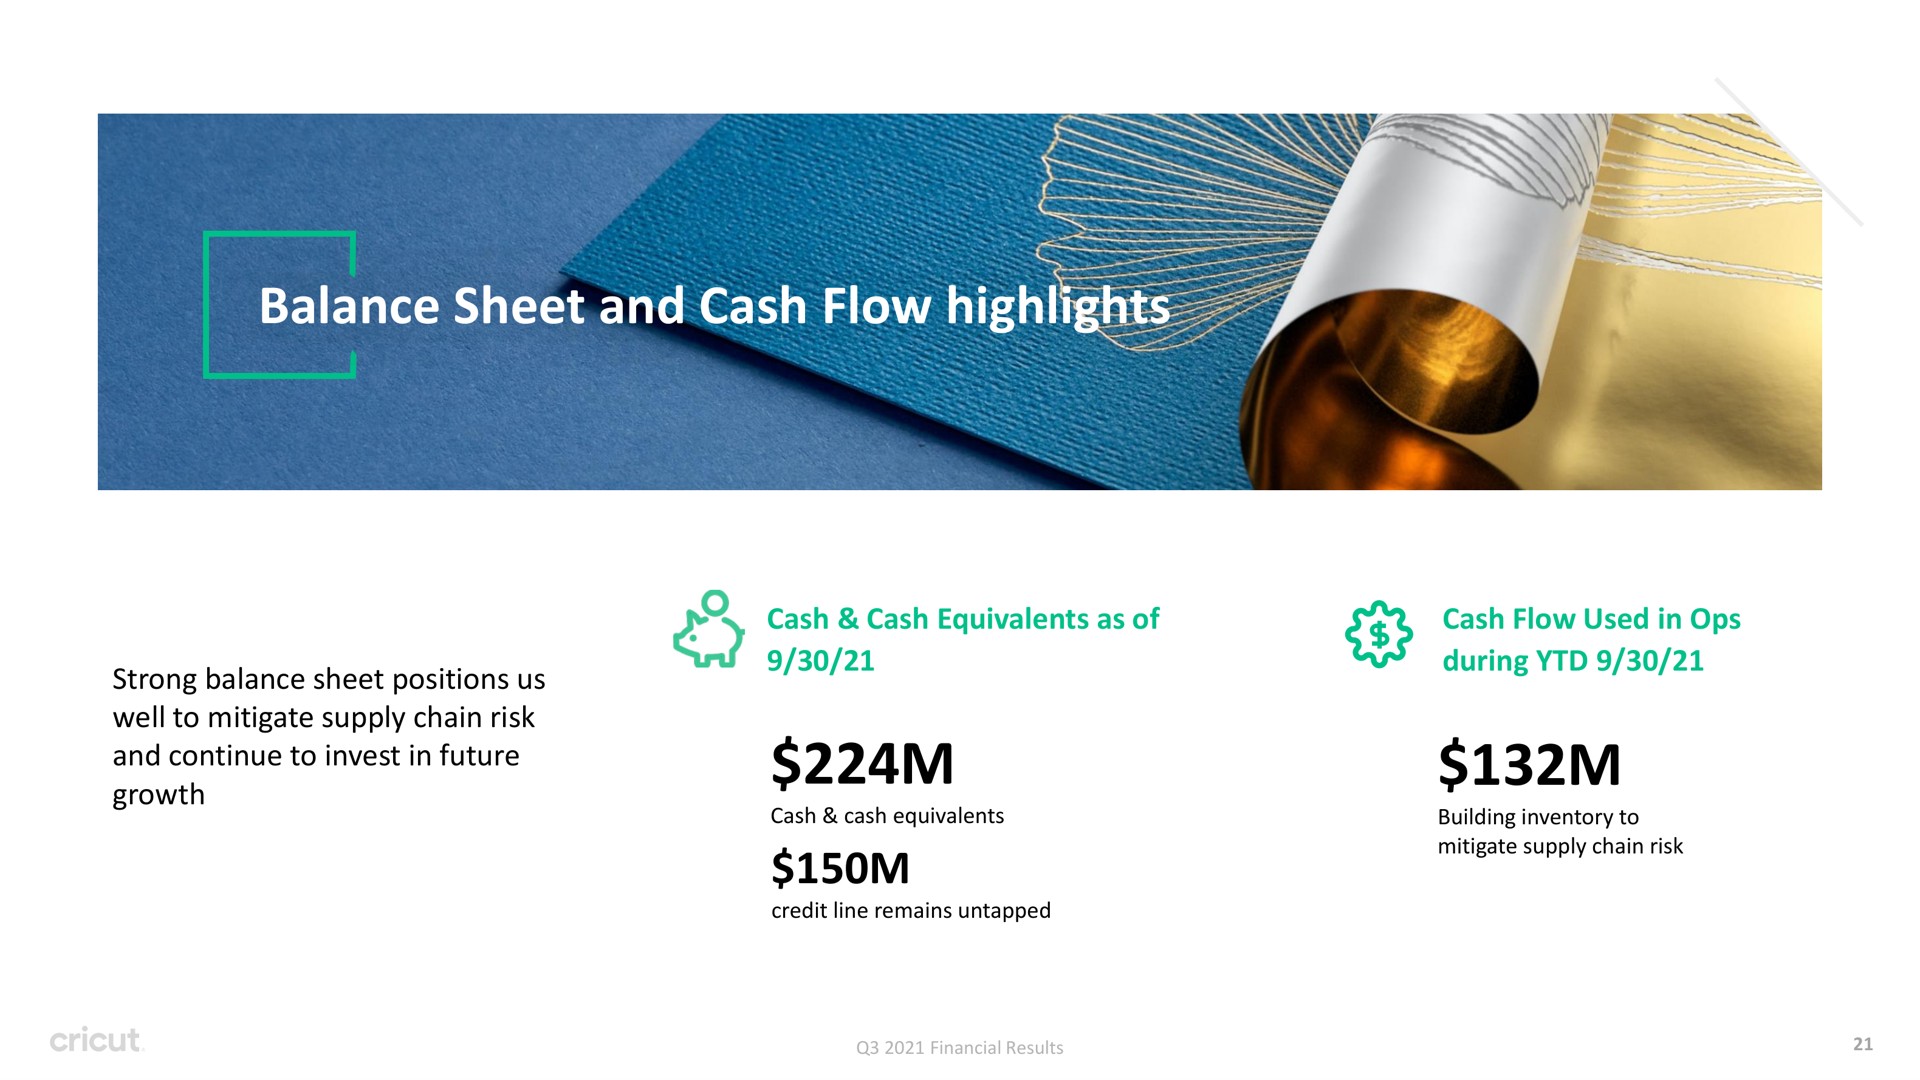 balance sheet and cash flow highlights | Circut